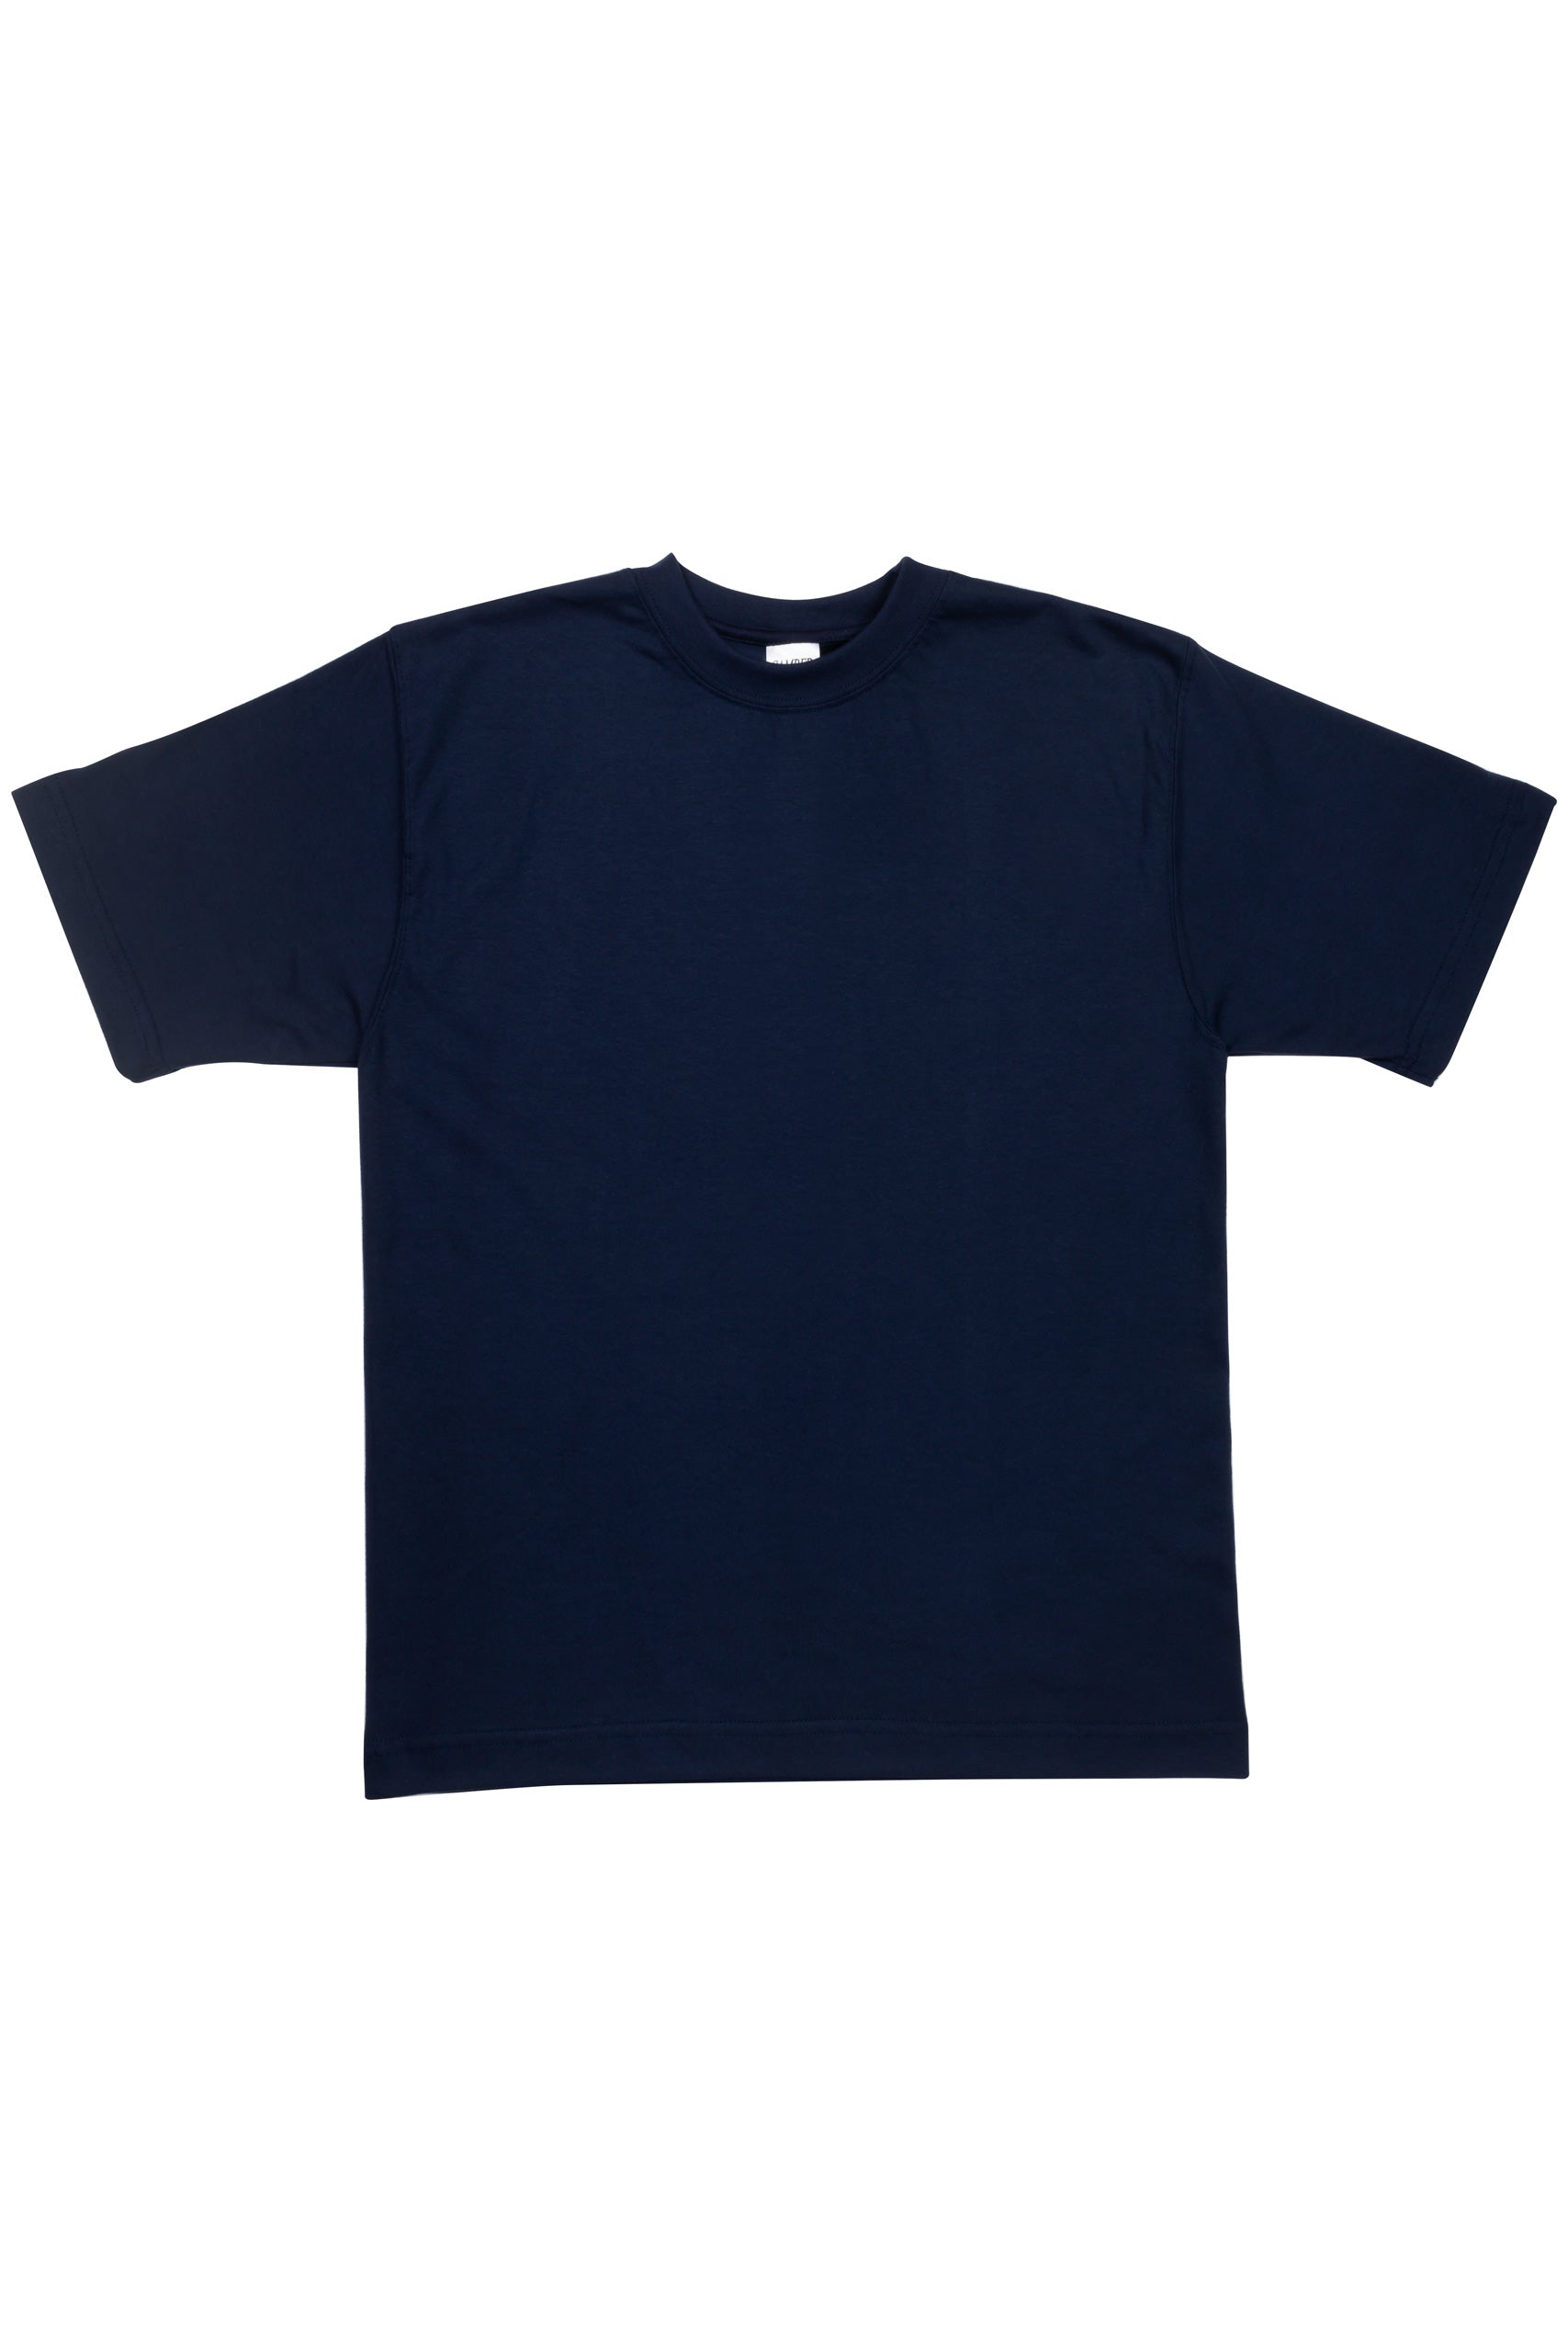 701 Navy Camber T-Shirt Clothiers USA Embark – 6oz